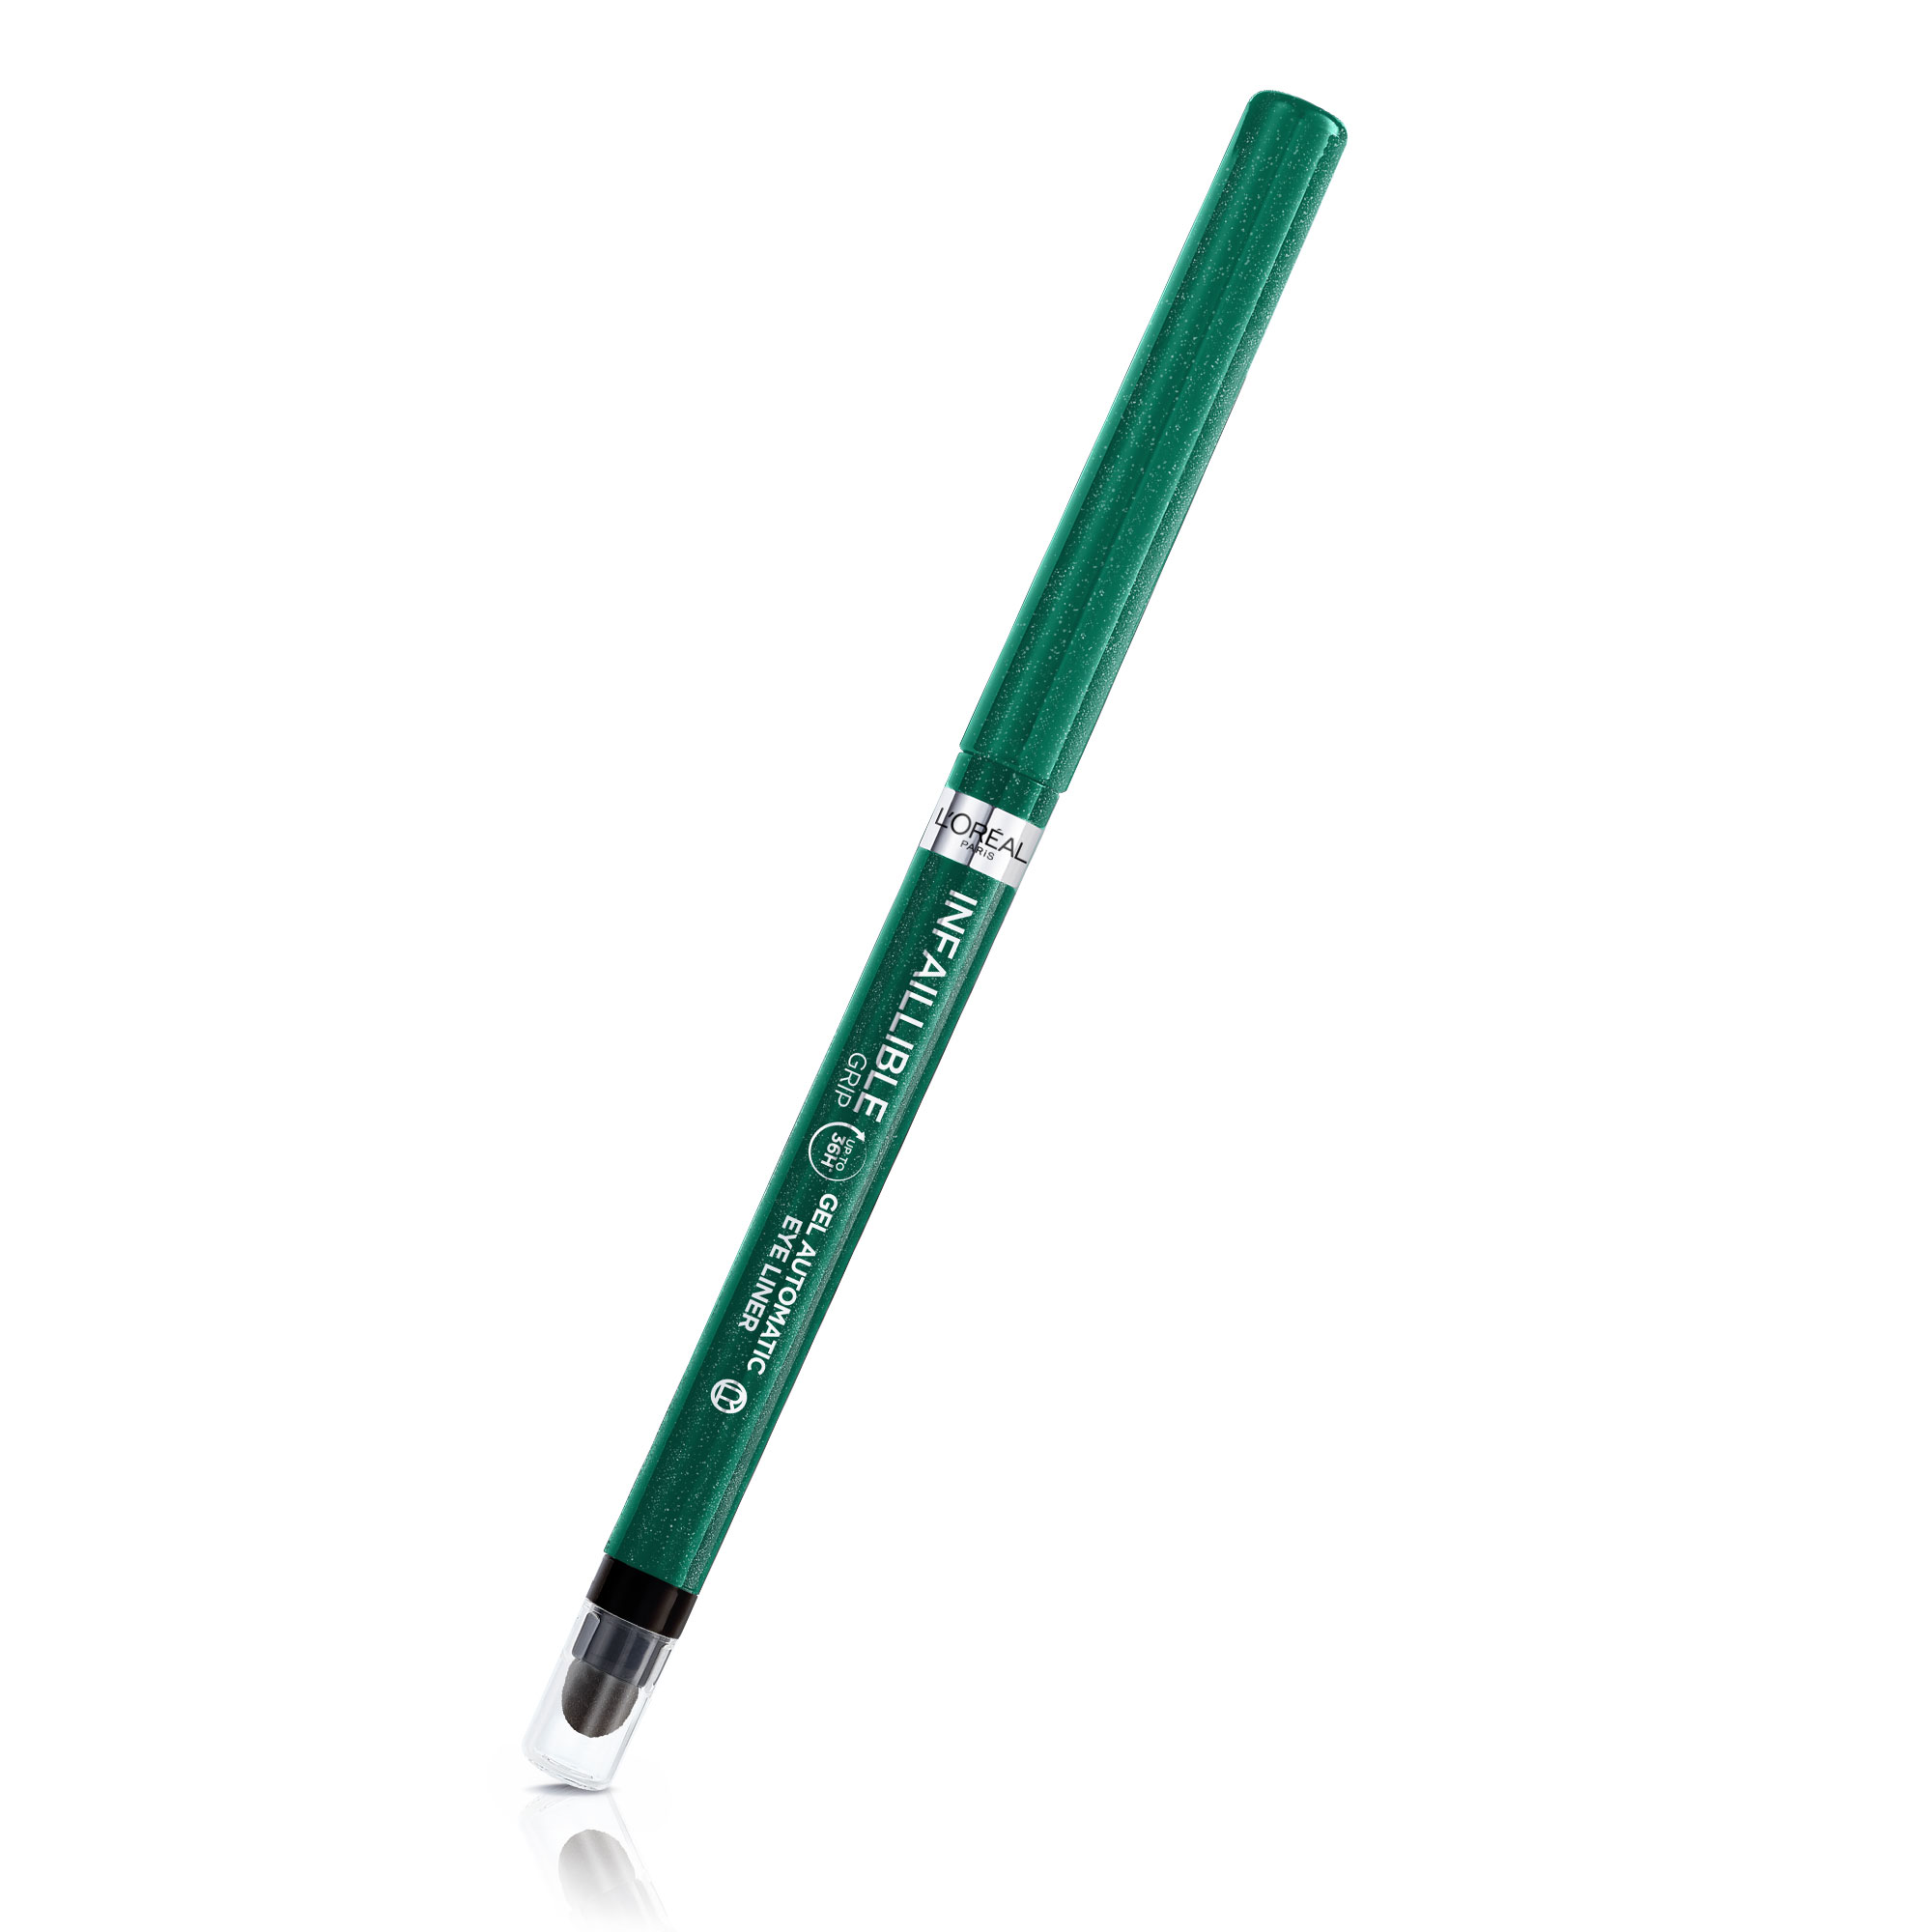 Creion mecanic pentru ochi tip gel Infaillible 36H Grip, Emerald Green, 1.2 g, Loreal Paris